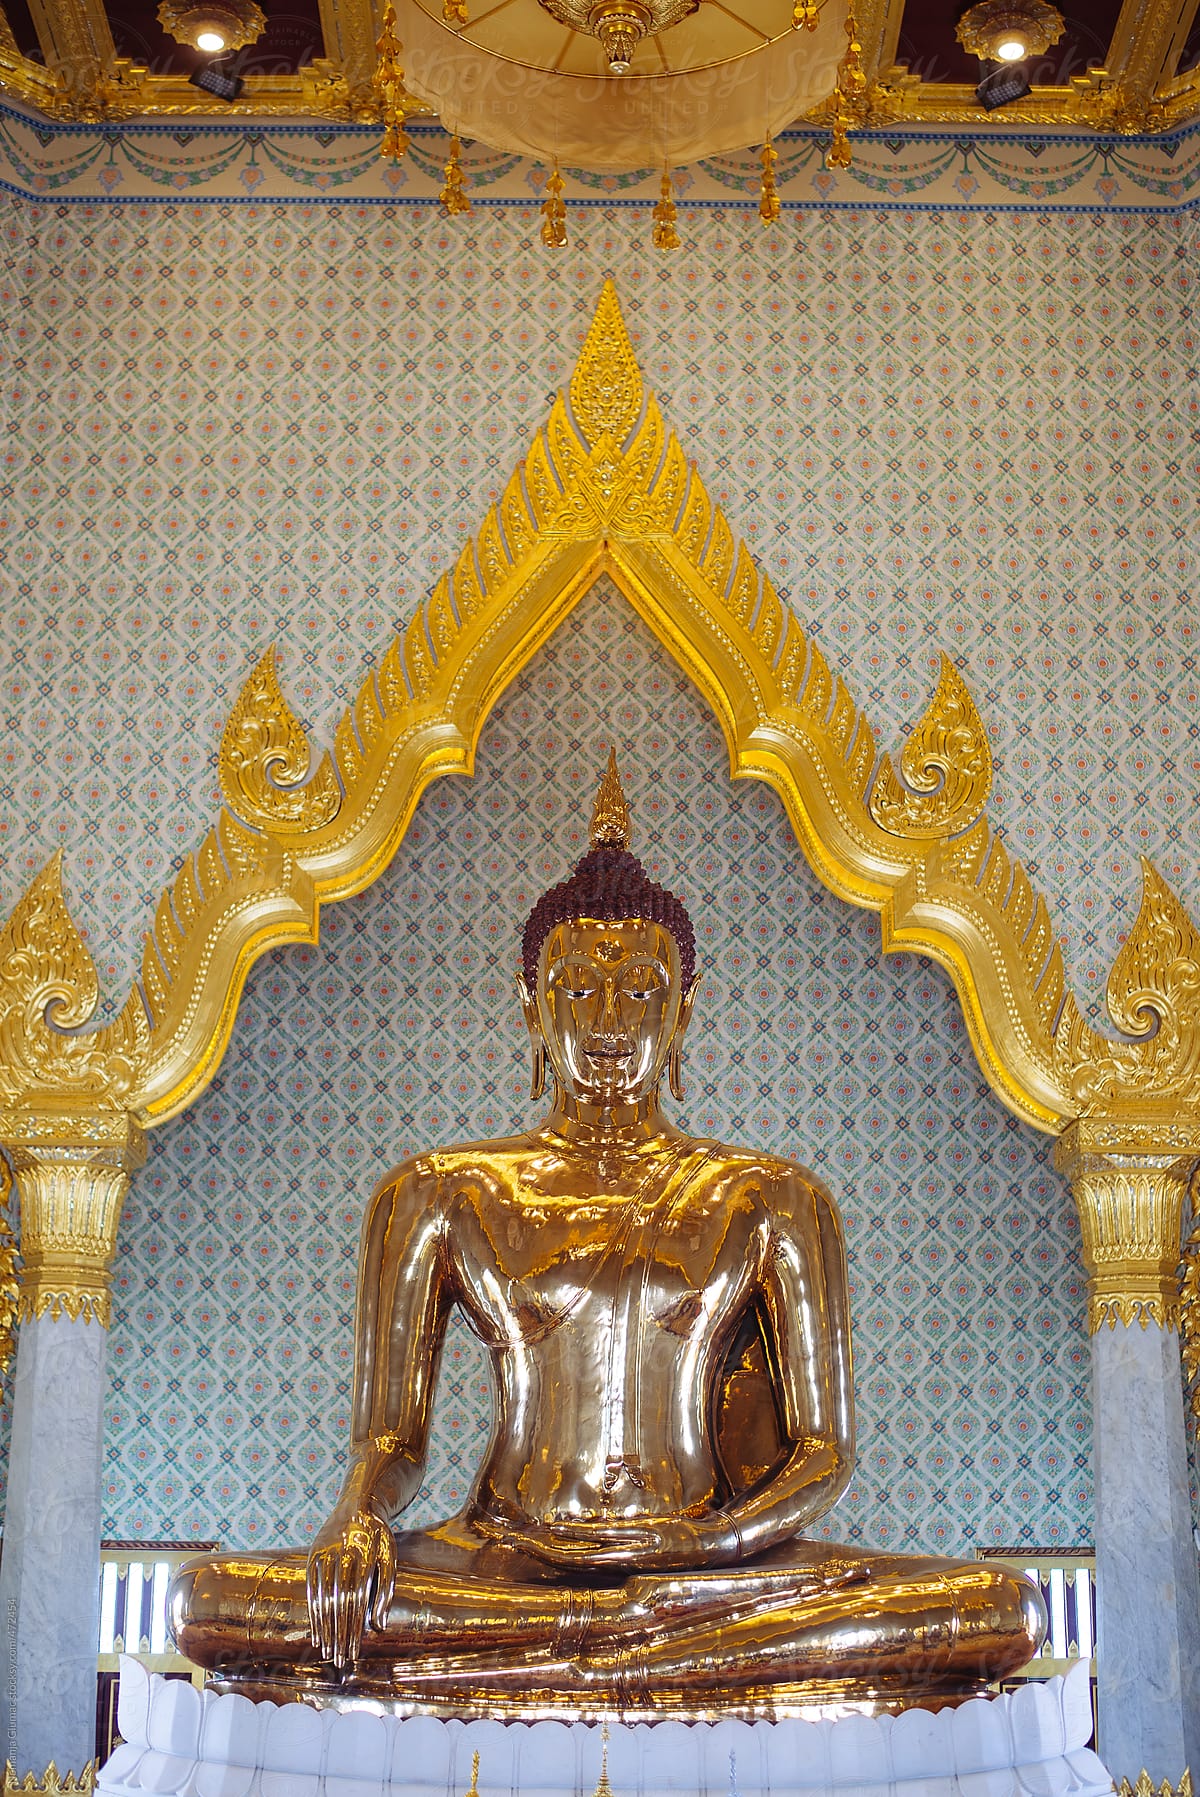 The Golden Buddha